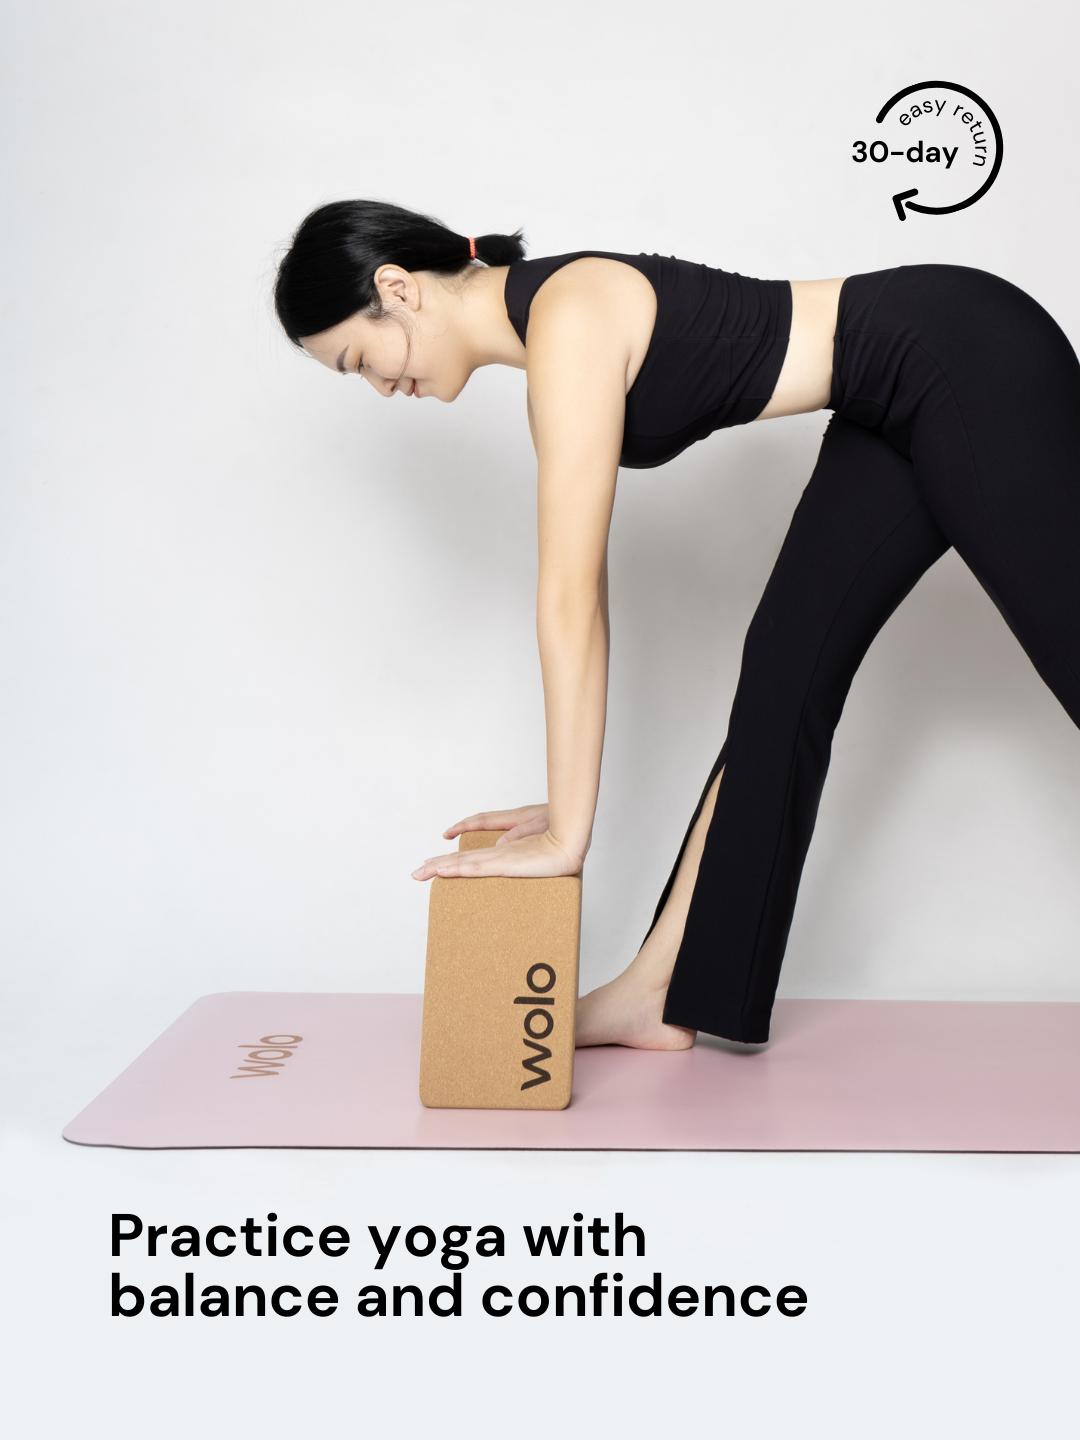 Lady doing yoga on a sakura pink yoga mat